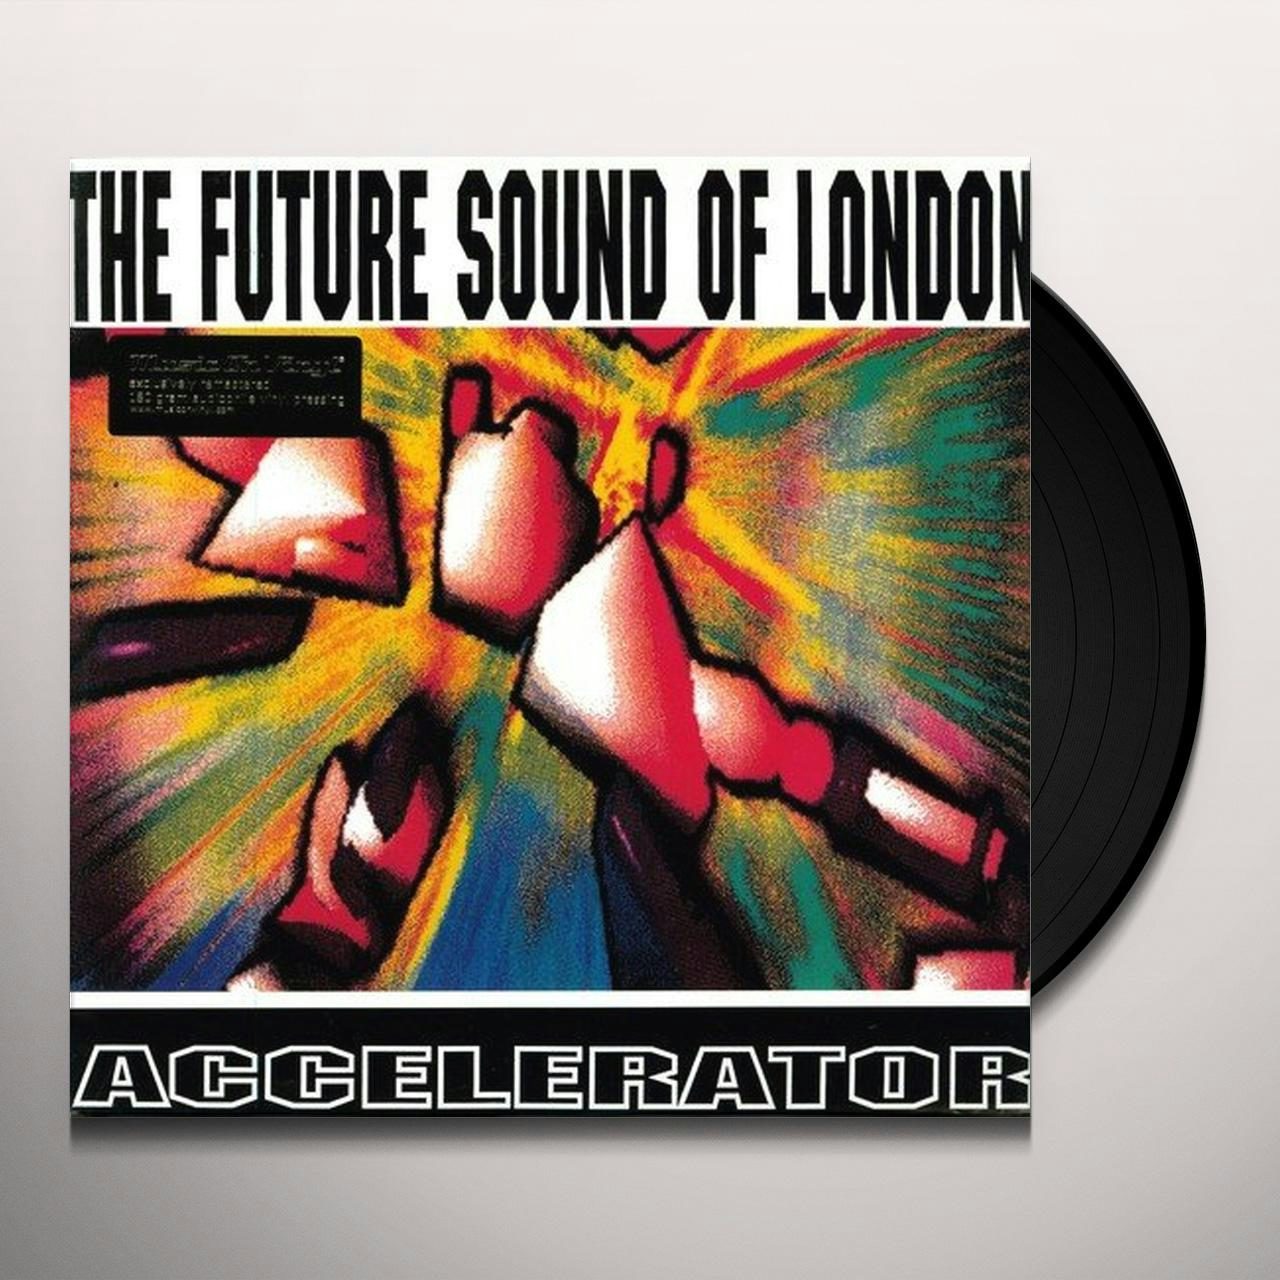 The Future Sound Of London Accelerator Vinyl Record